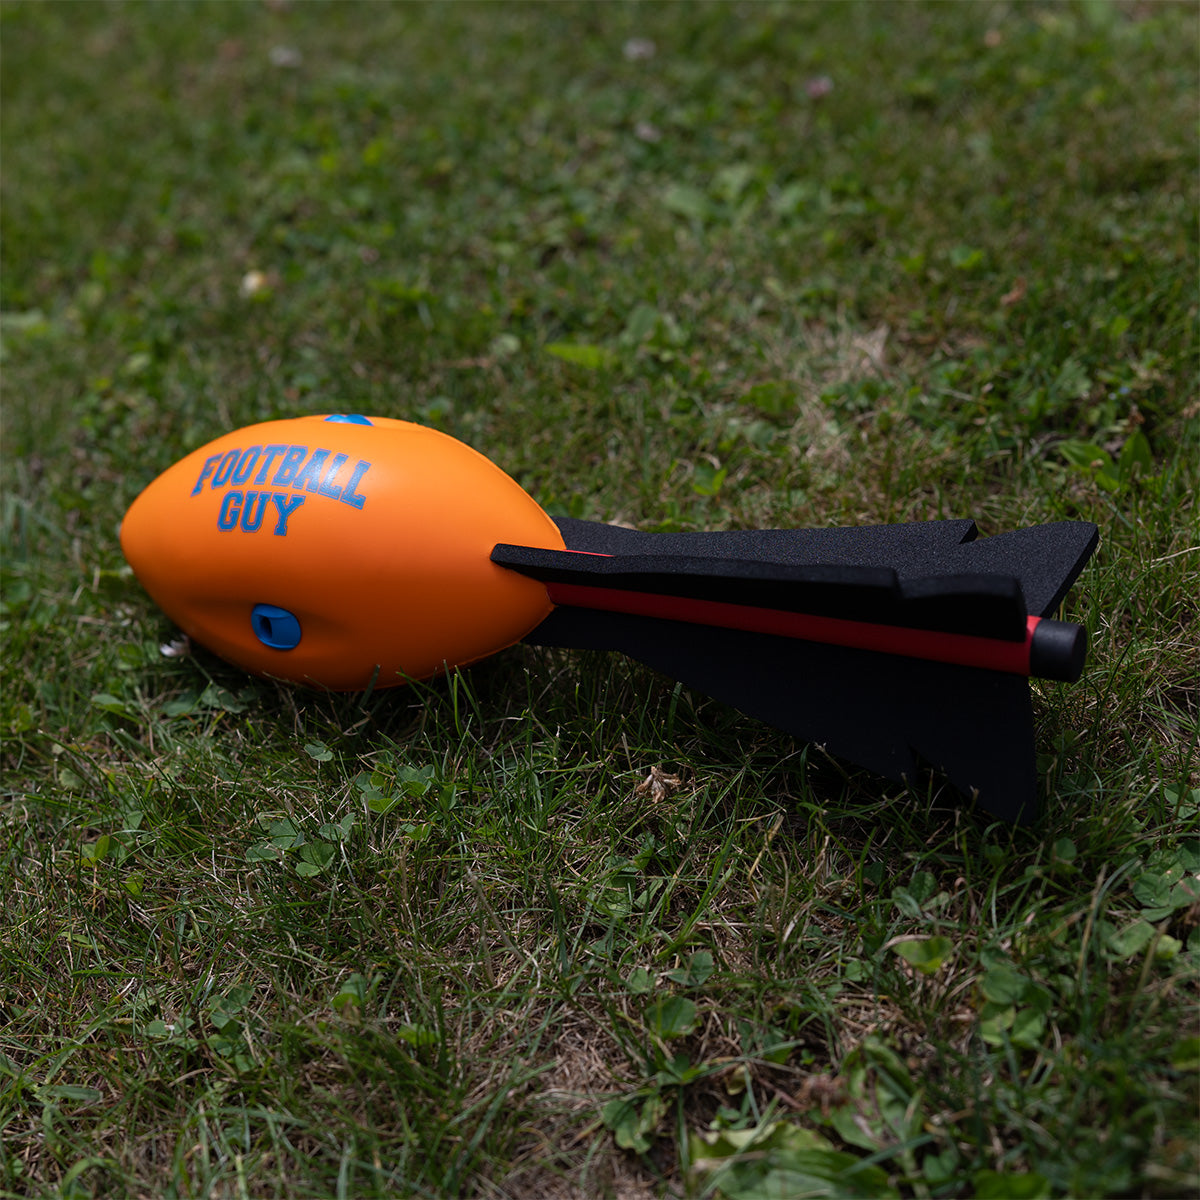 Football Guy Rocket Football-Accessories-Pardon My Take-Orange-One Size-Barstool Sports